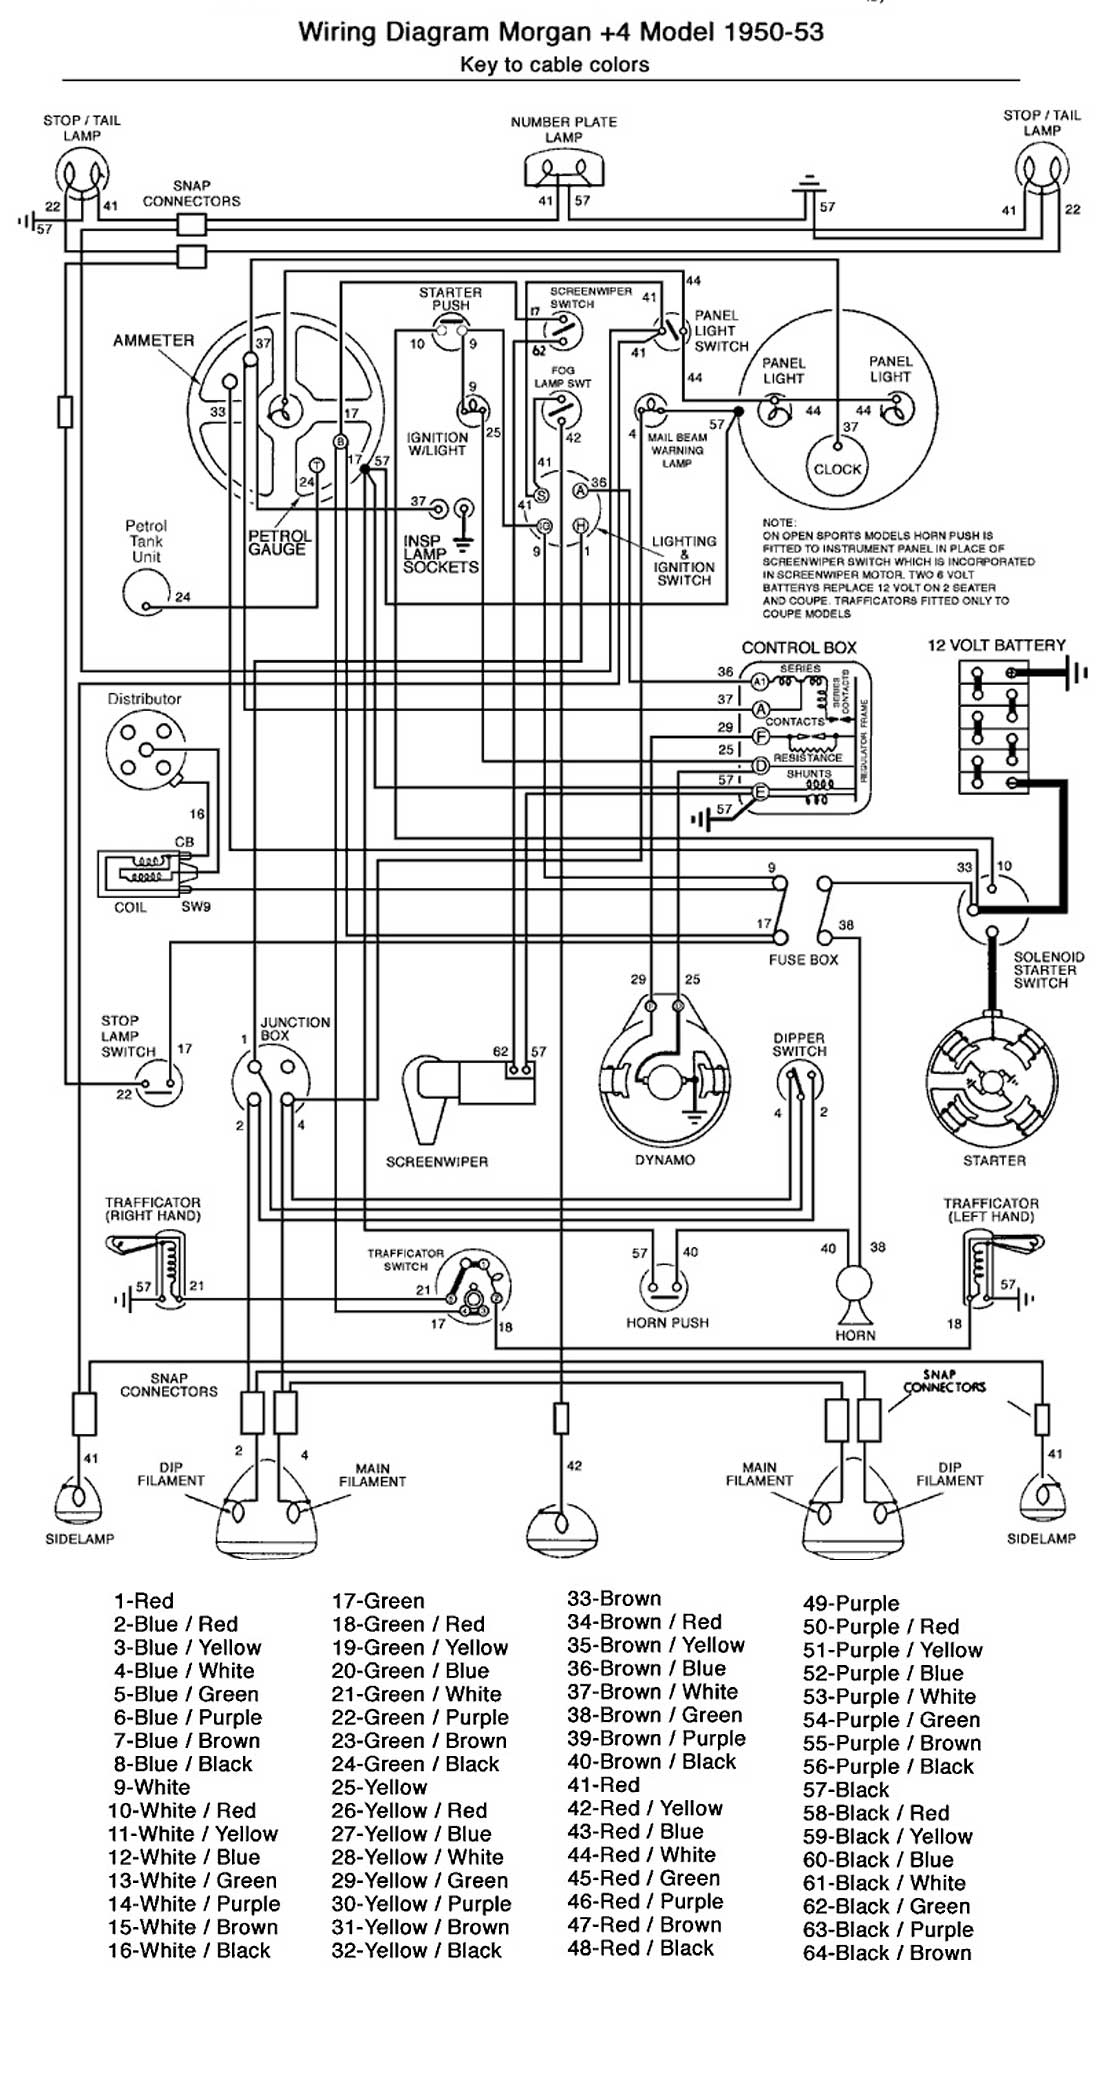 Morgan electrical classic wiring diagram 